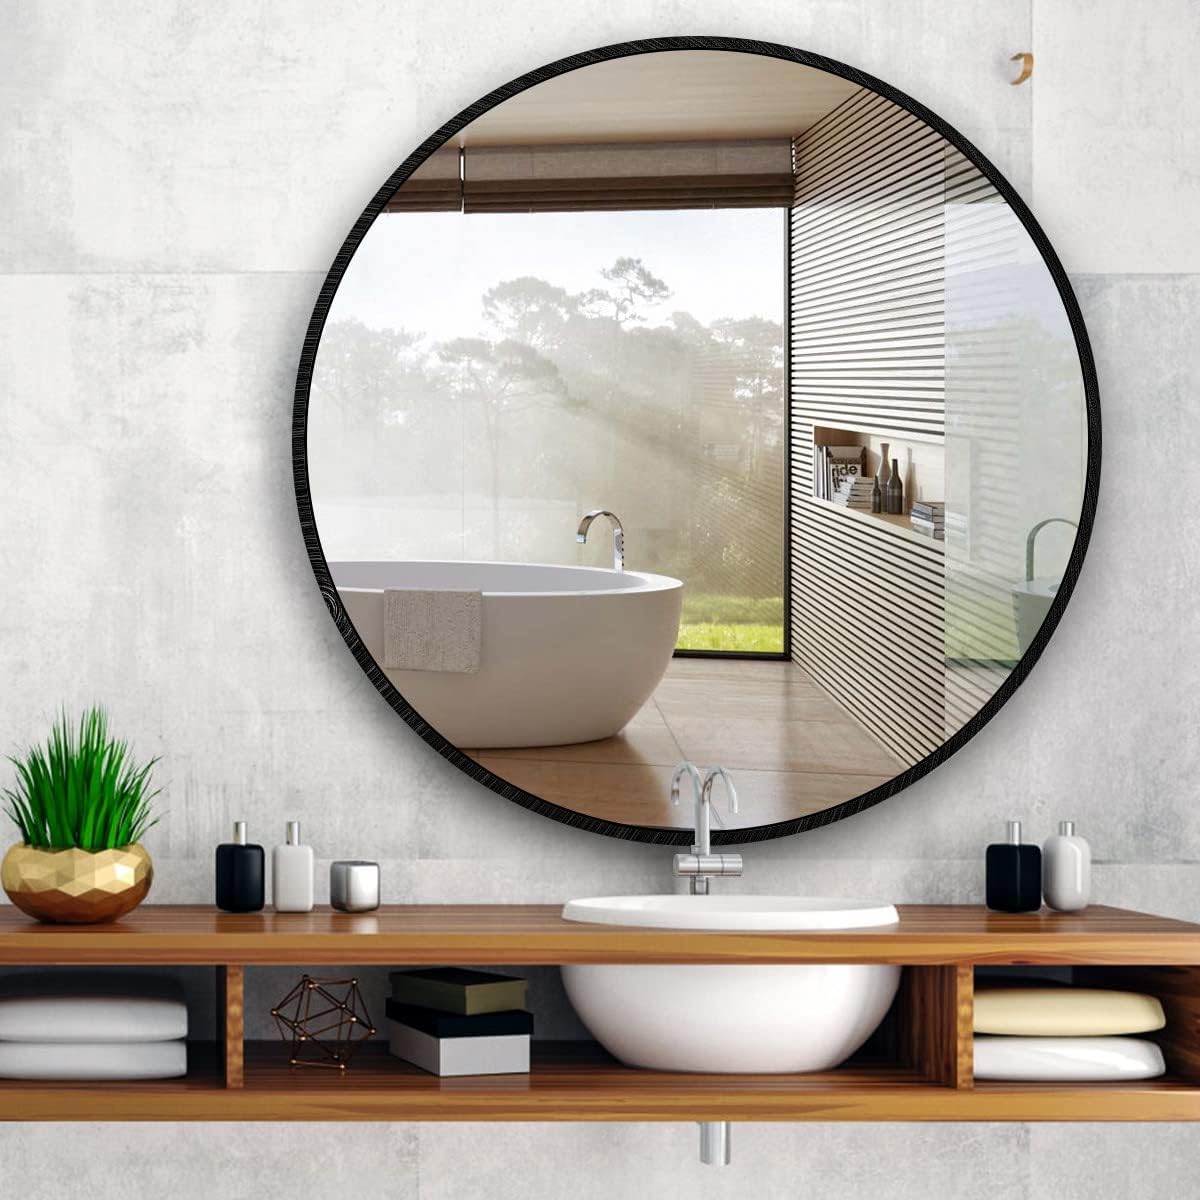 Itrue Black Round Mirror 36 Inch for Bathroom - $70